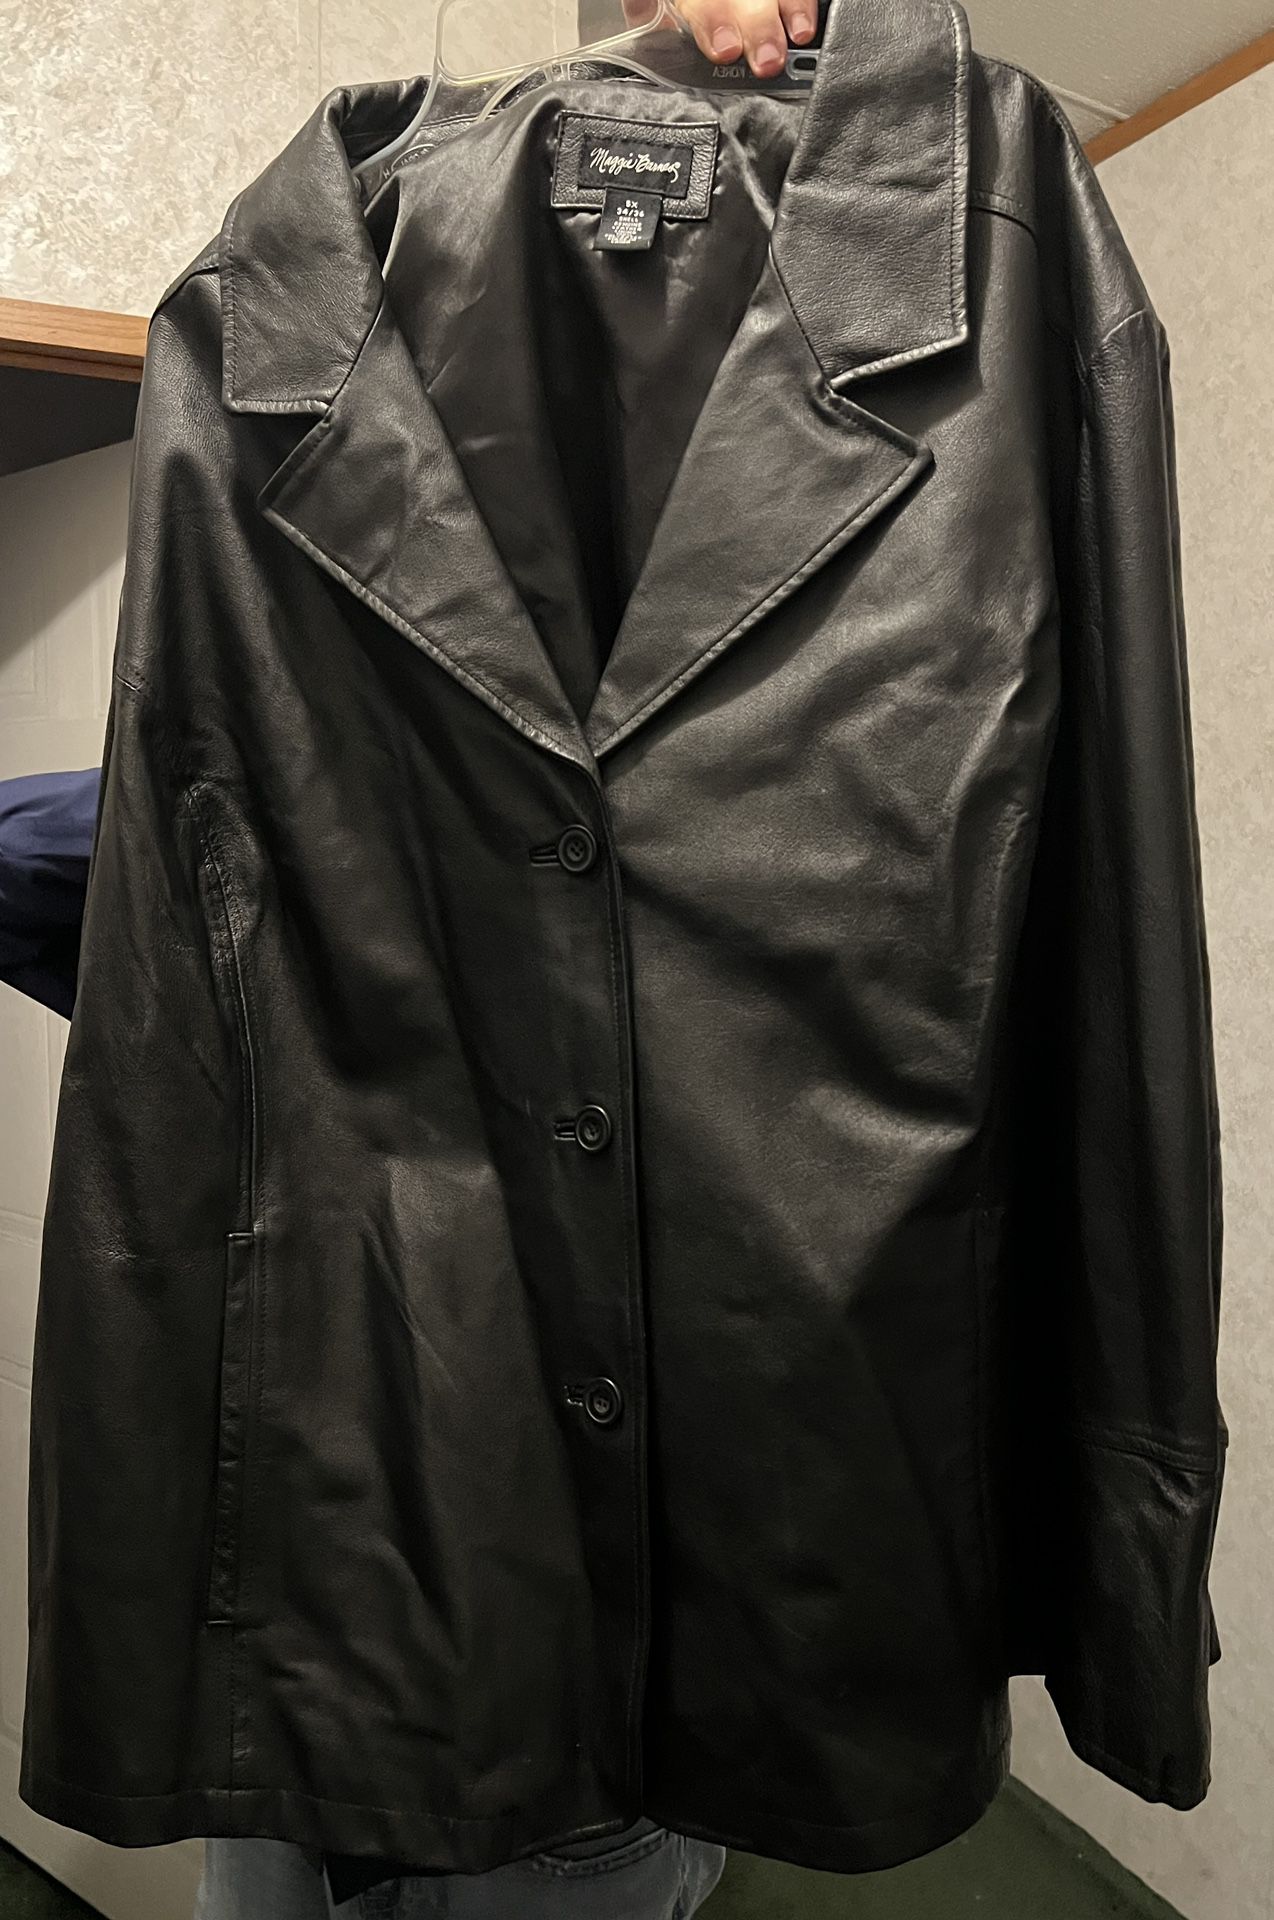 Real Black Leather Jacket